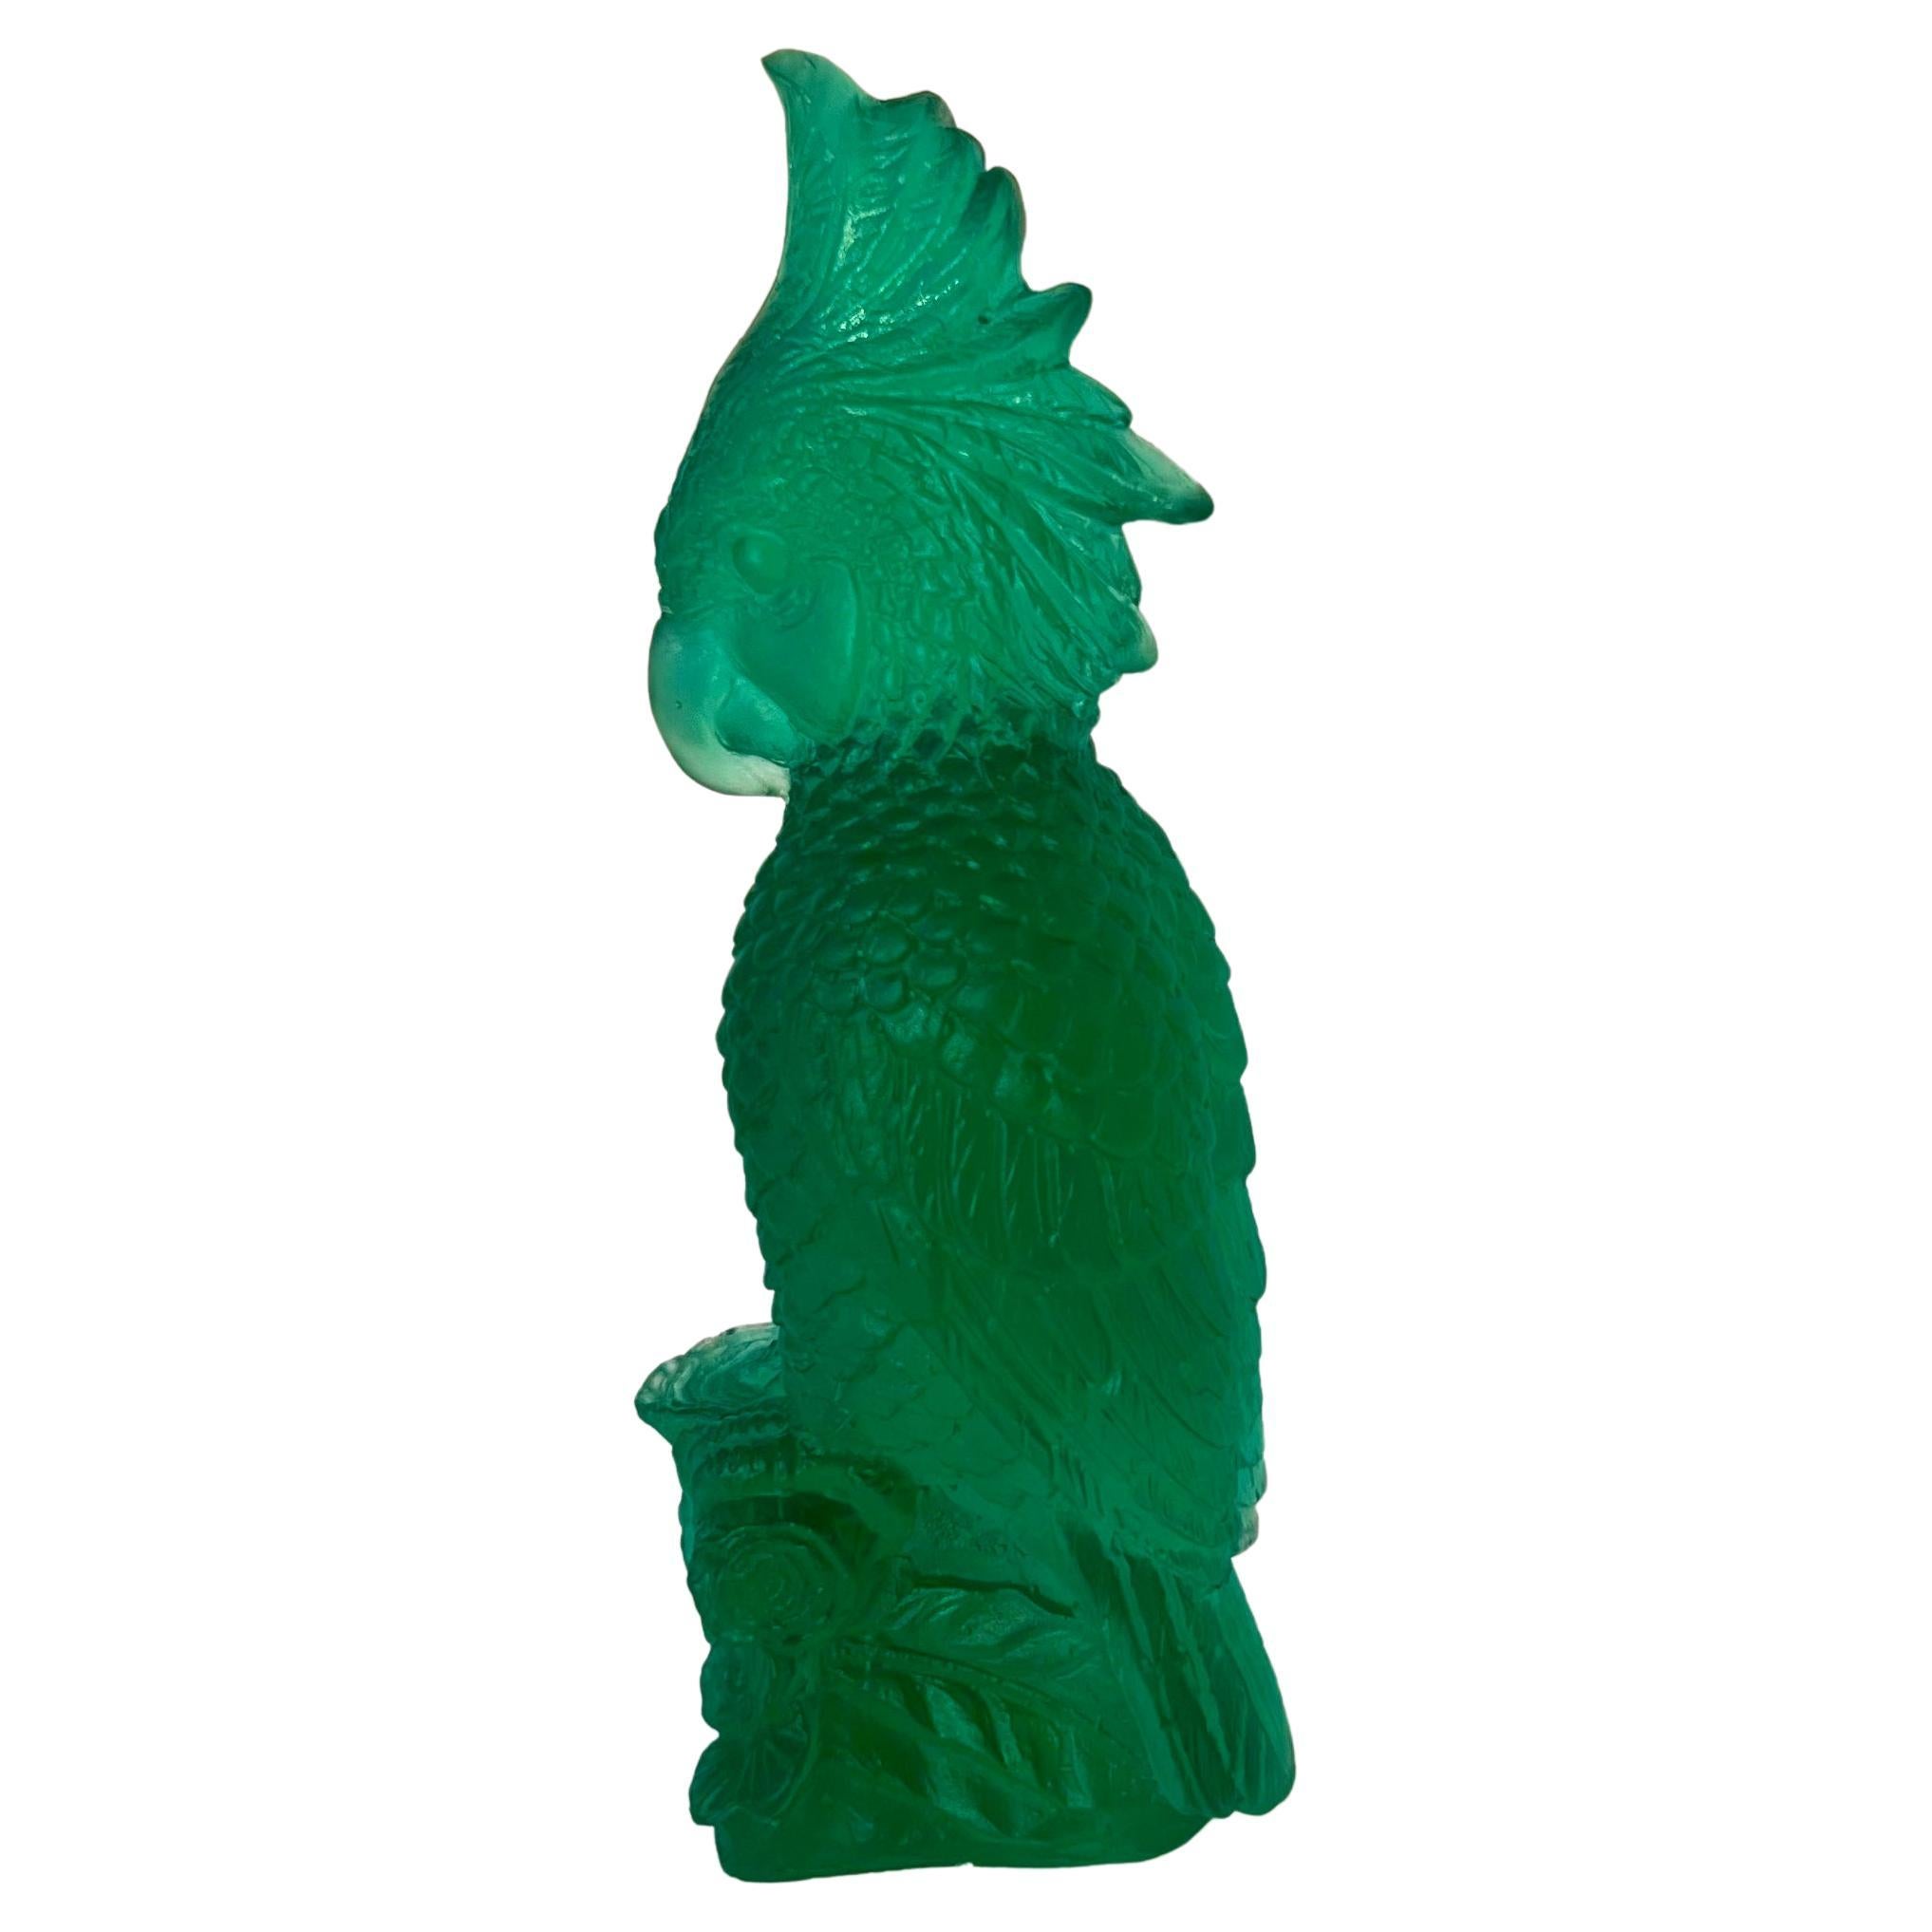 Sculpture de perroquet en verre Pate-de-Verre sculptée à la main en vert émeraude